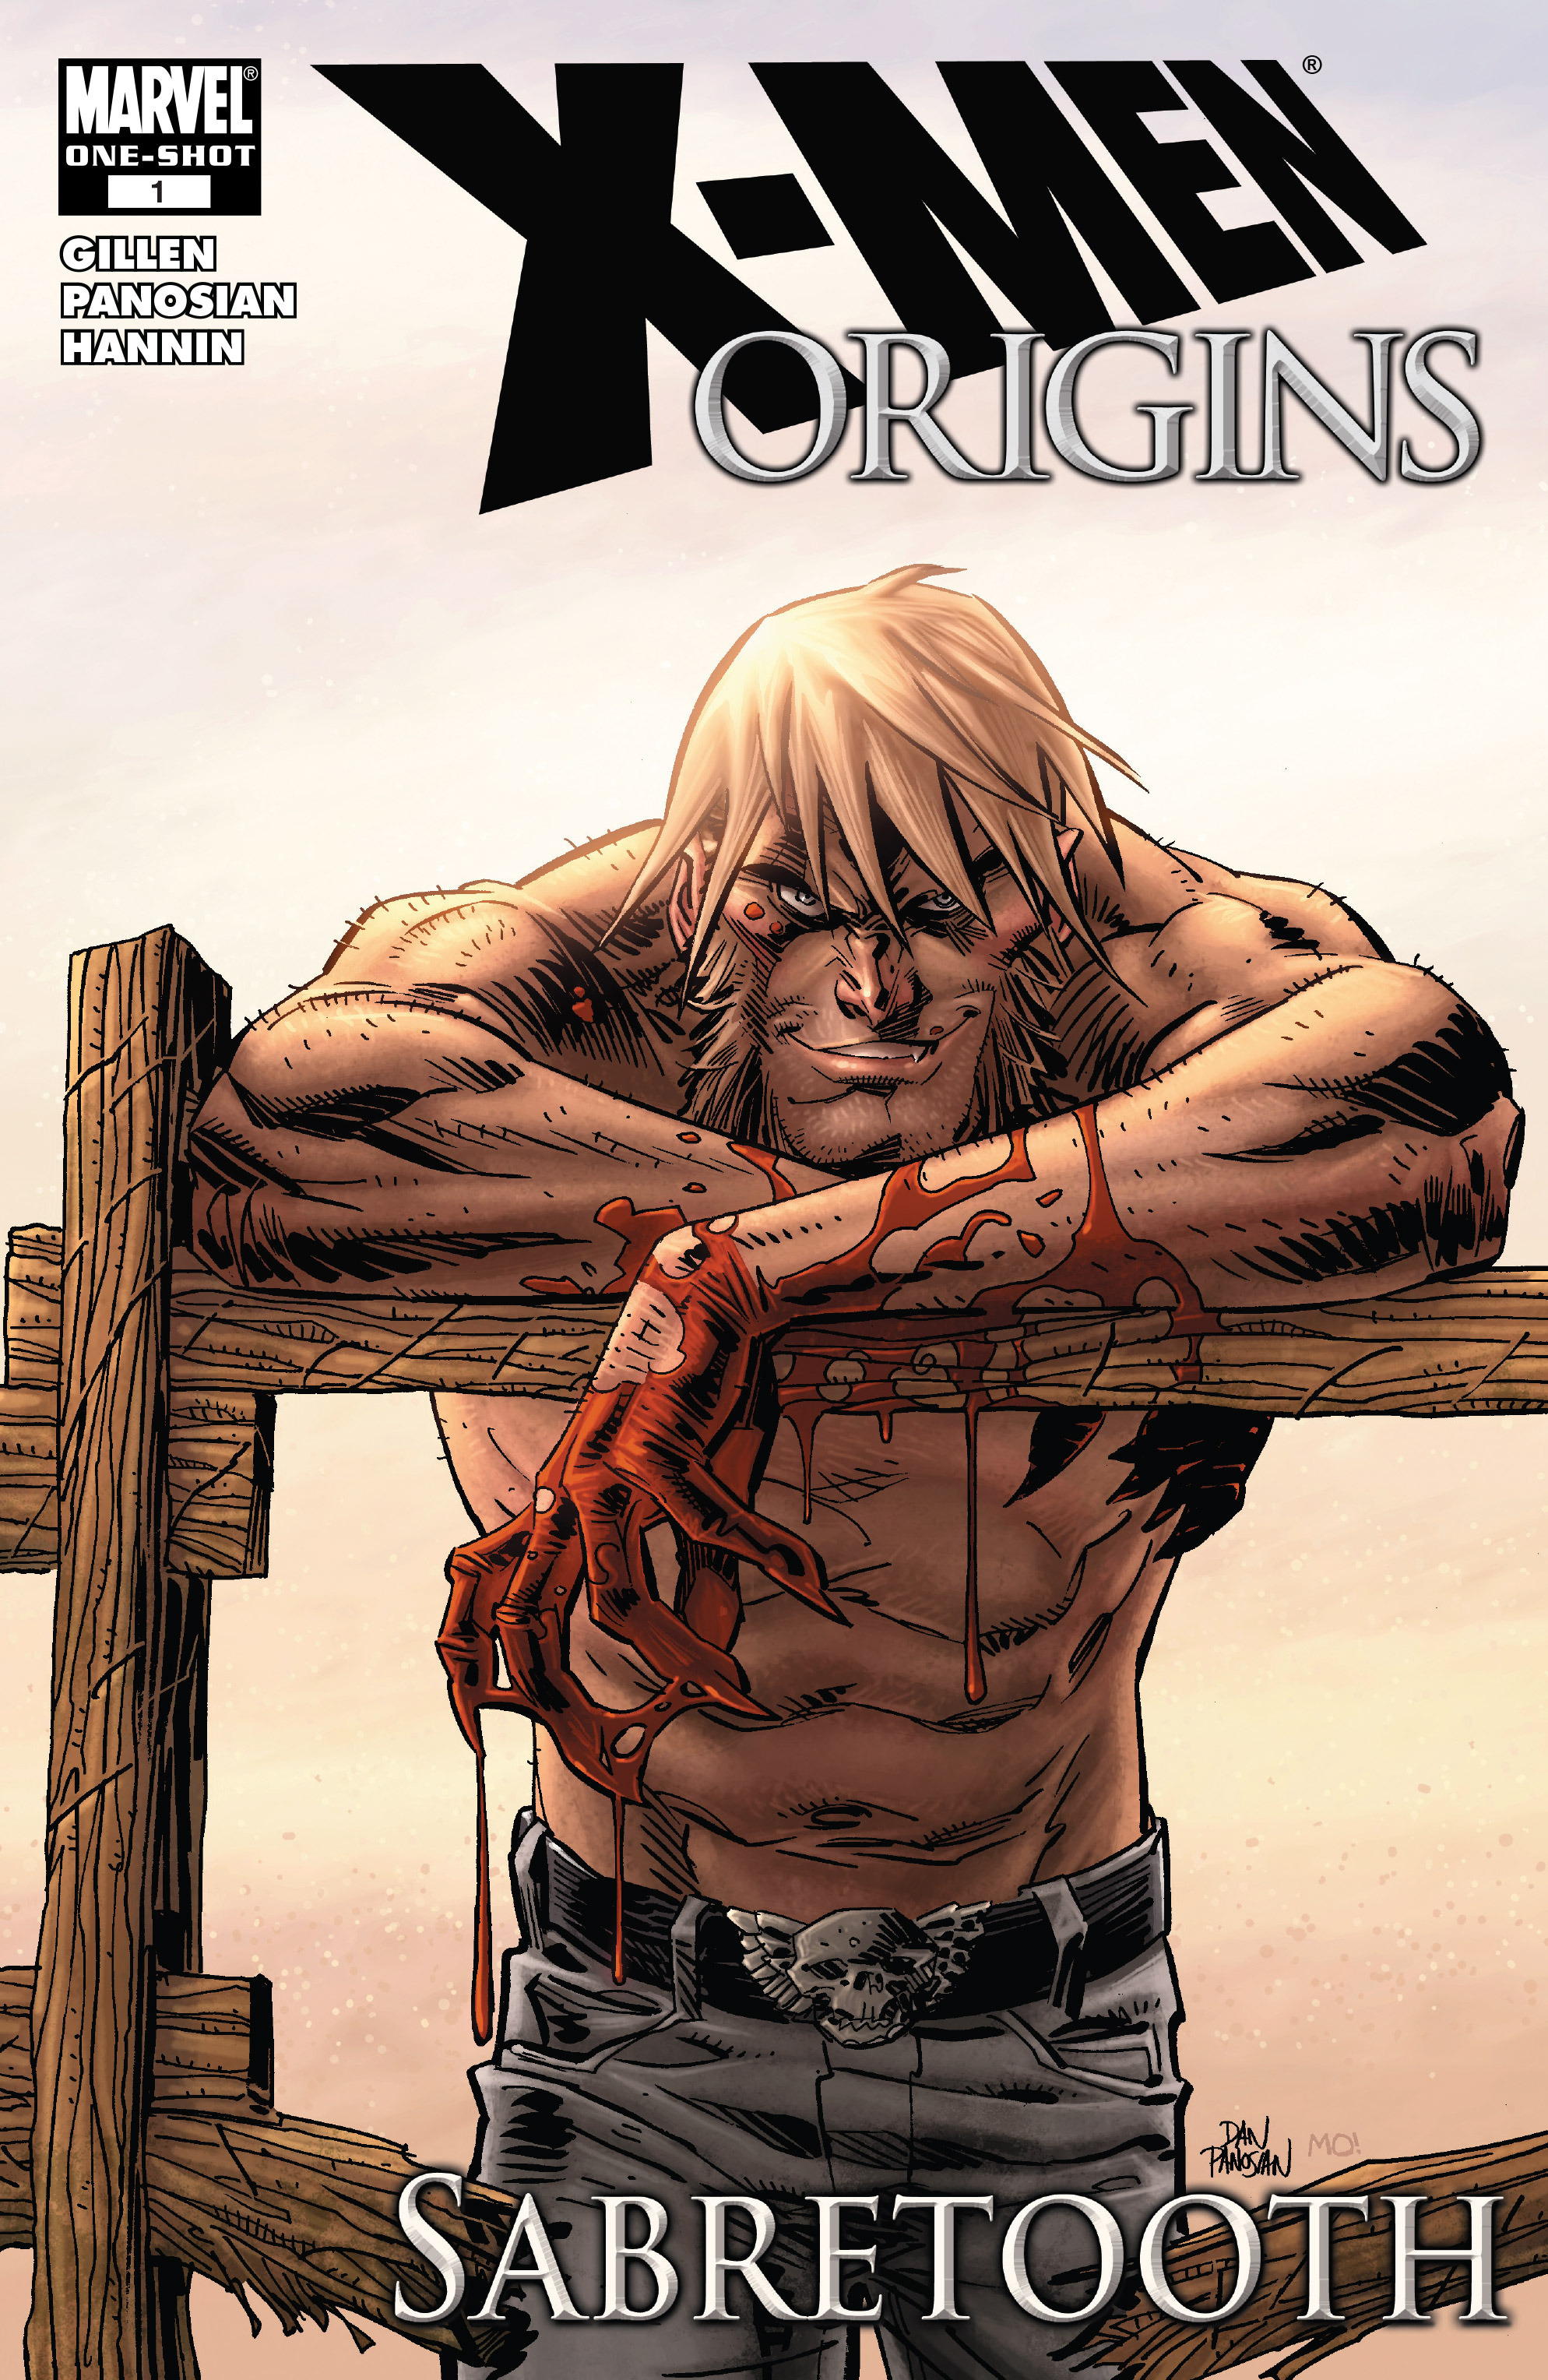 X Men Origins Sabretooth Full | Read X Men Origins Sabretooth Full comic  online in high quality. Read Full Comic online for free - Read comics  online in high quality .| READ COMIC ONLINE